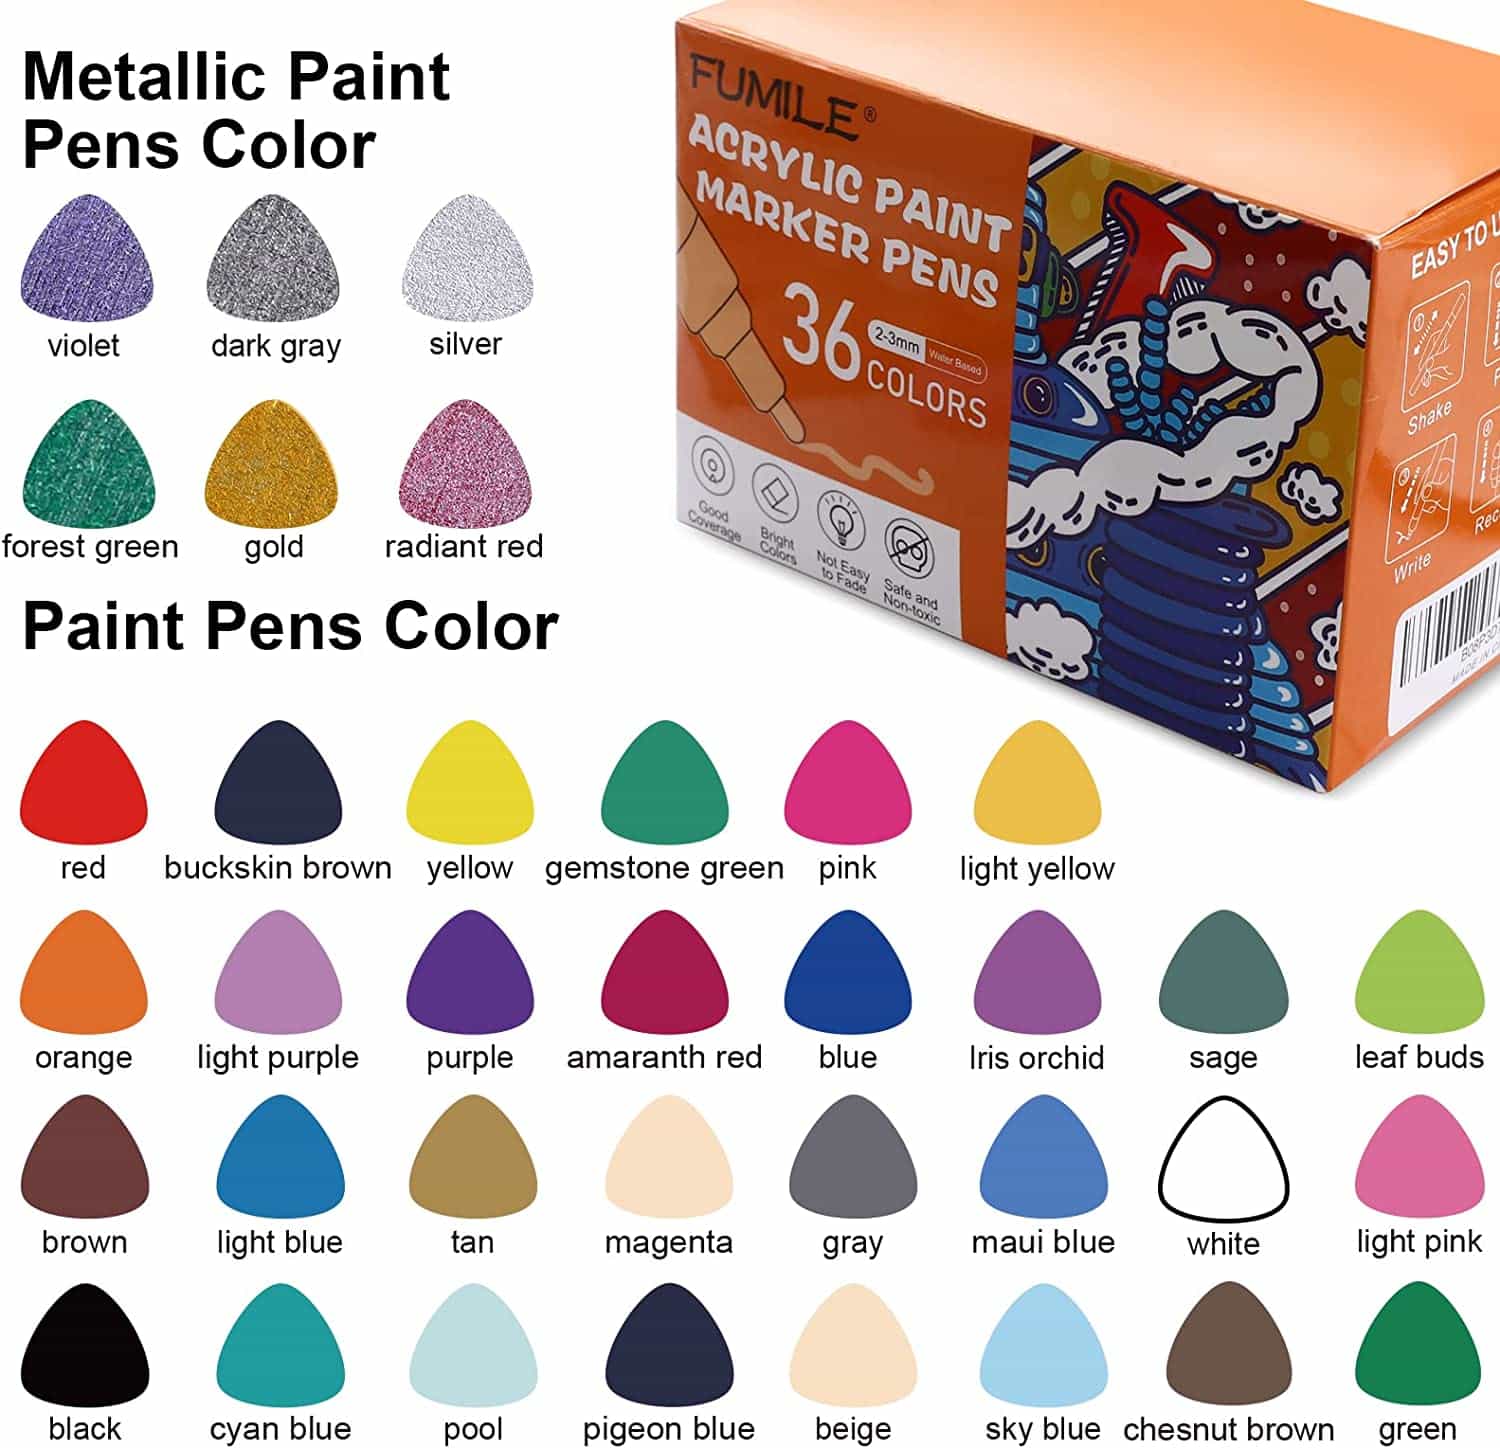 FUMILE 36PCS Acrylic Paint Pen shades